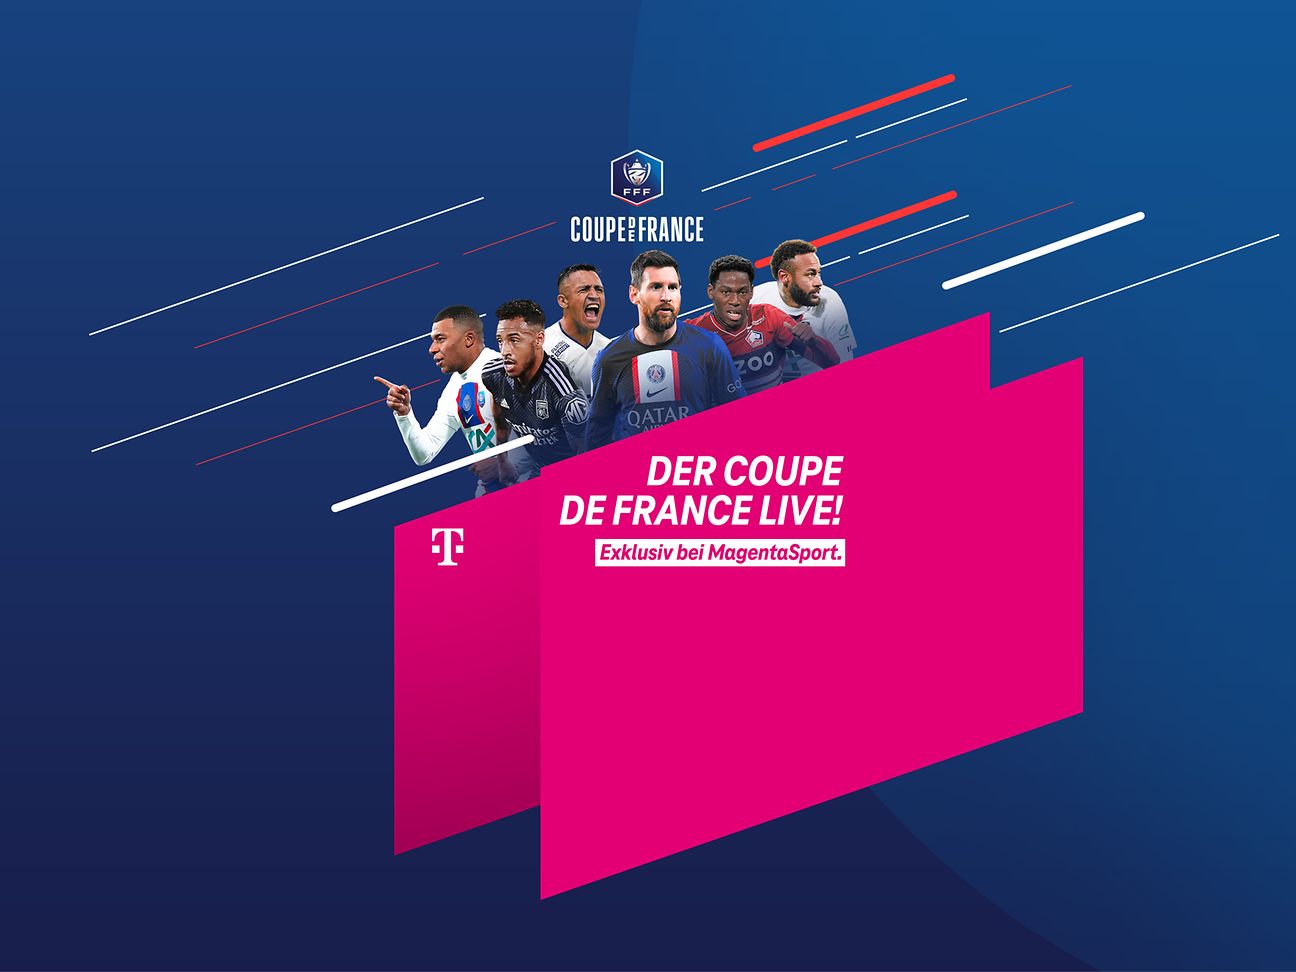 Coupe de France exklusiv bei MagentaSport Deutsche Telekom